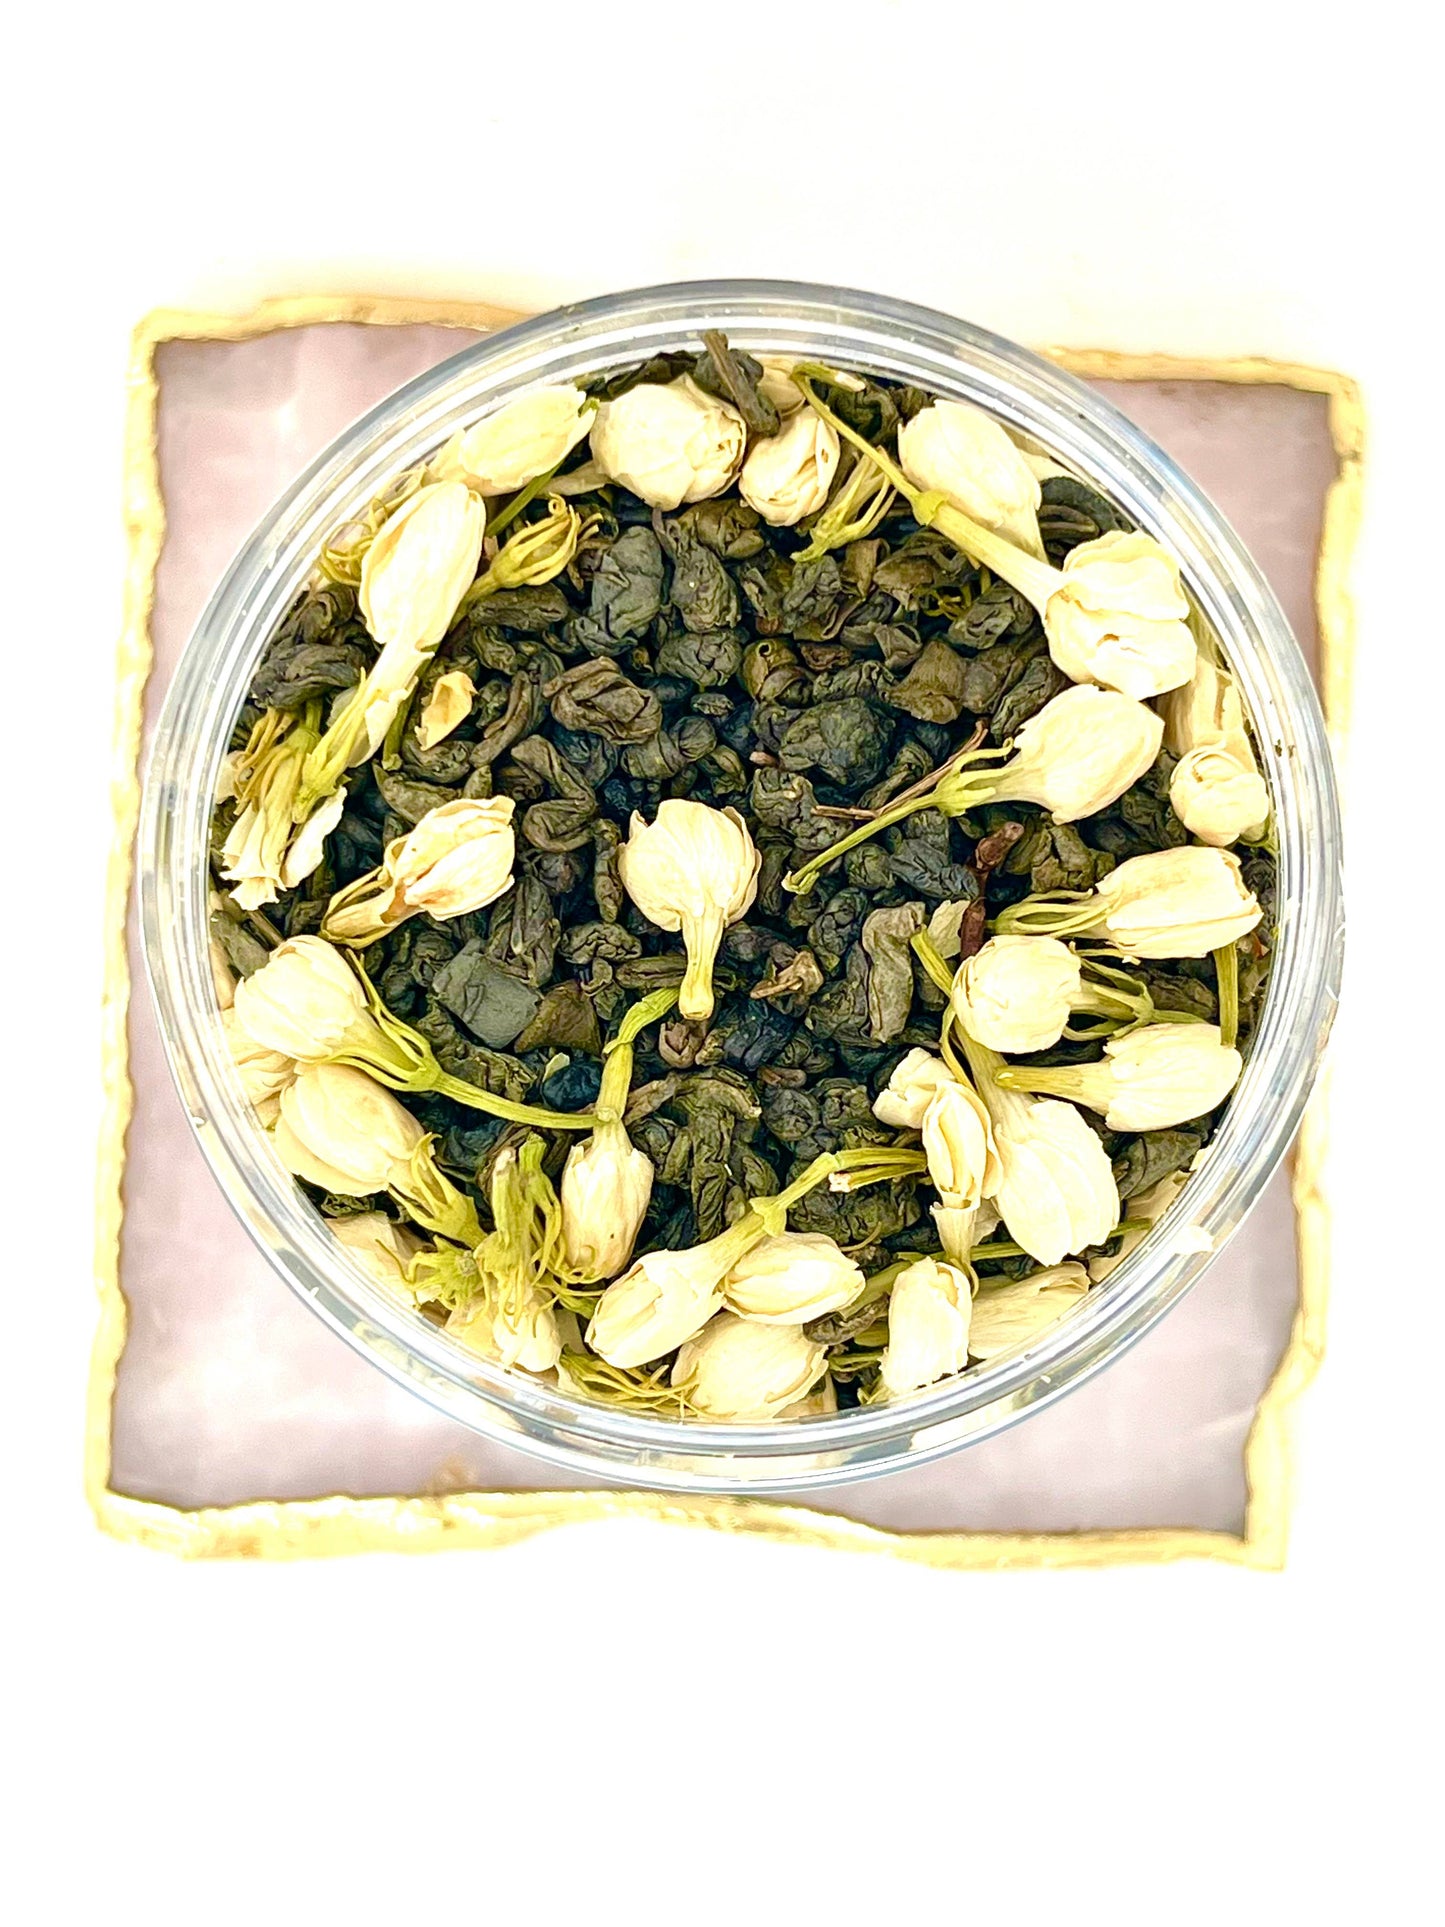 JASMINE FIELDS Handcrafted Herbal Tea Blend